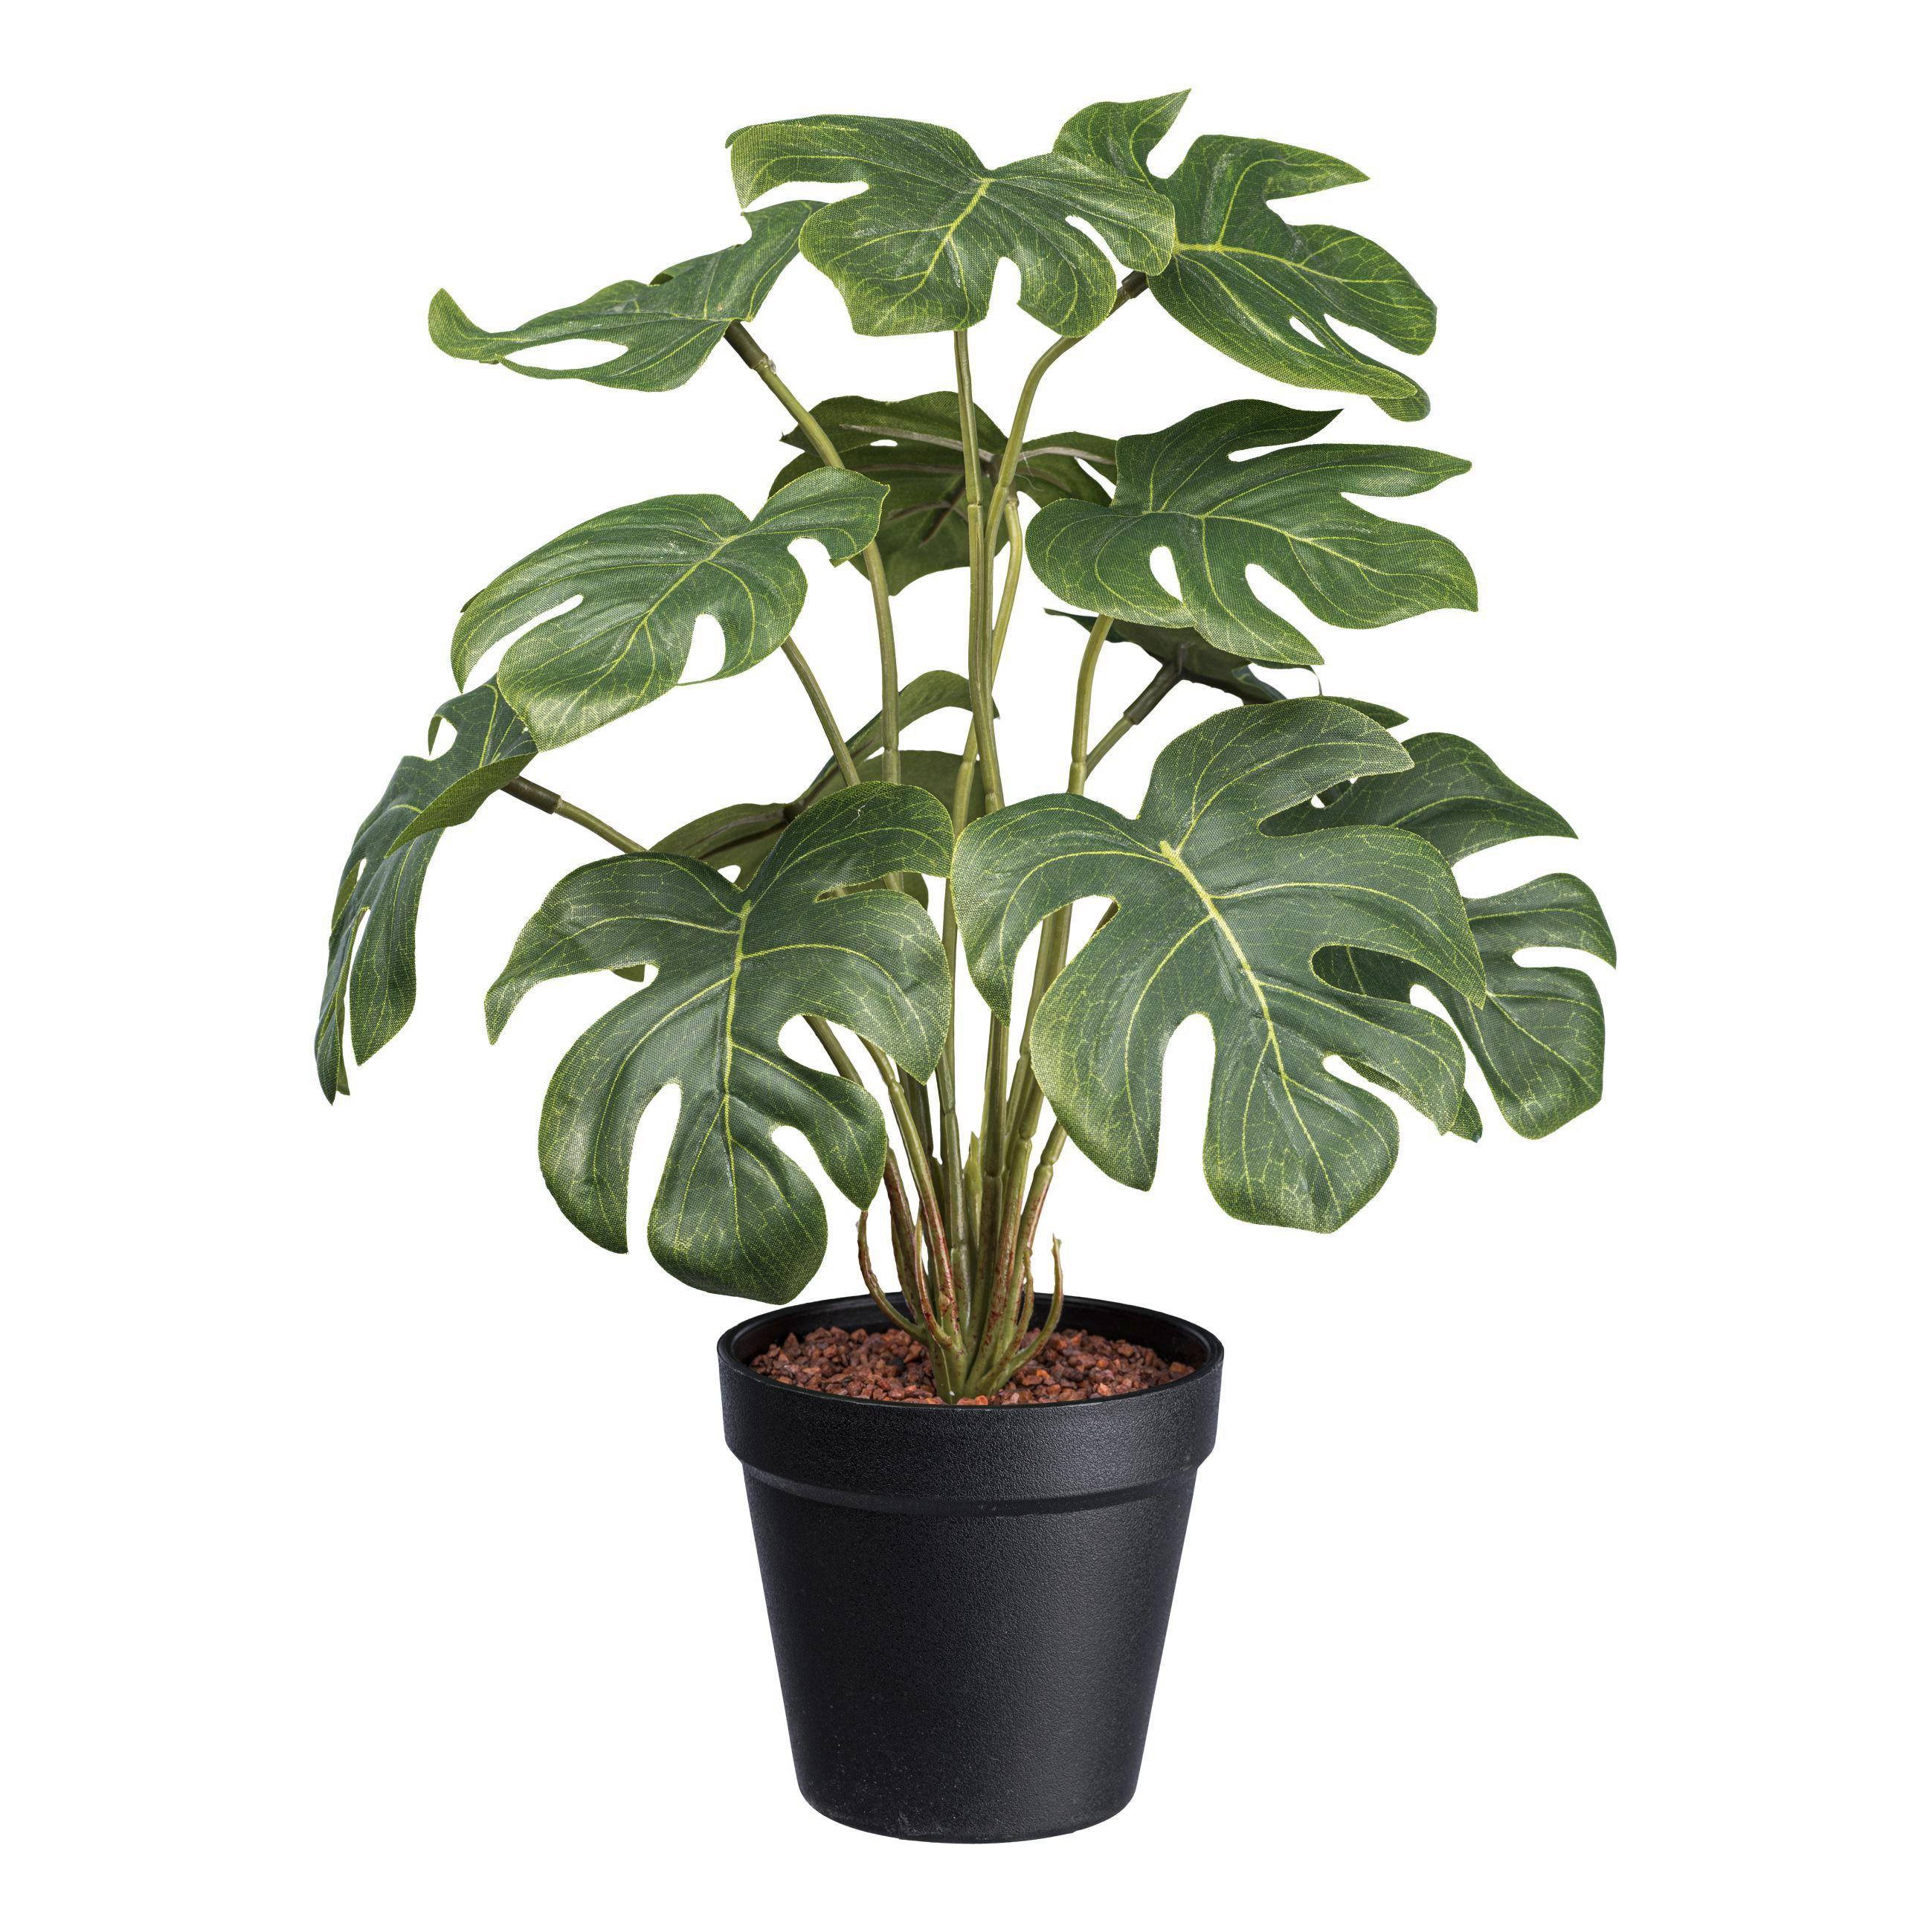 Umelá Rastlina V: 38cm - čierna/zelená, Basics, plast (38cm) - Modern Living